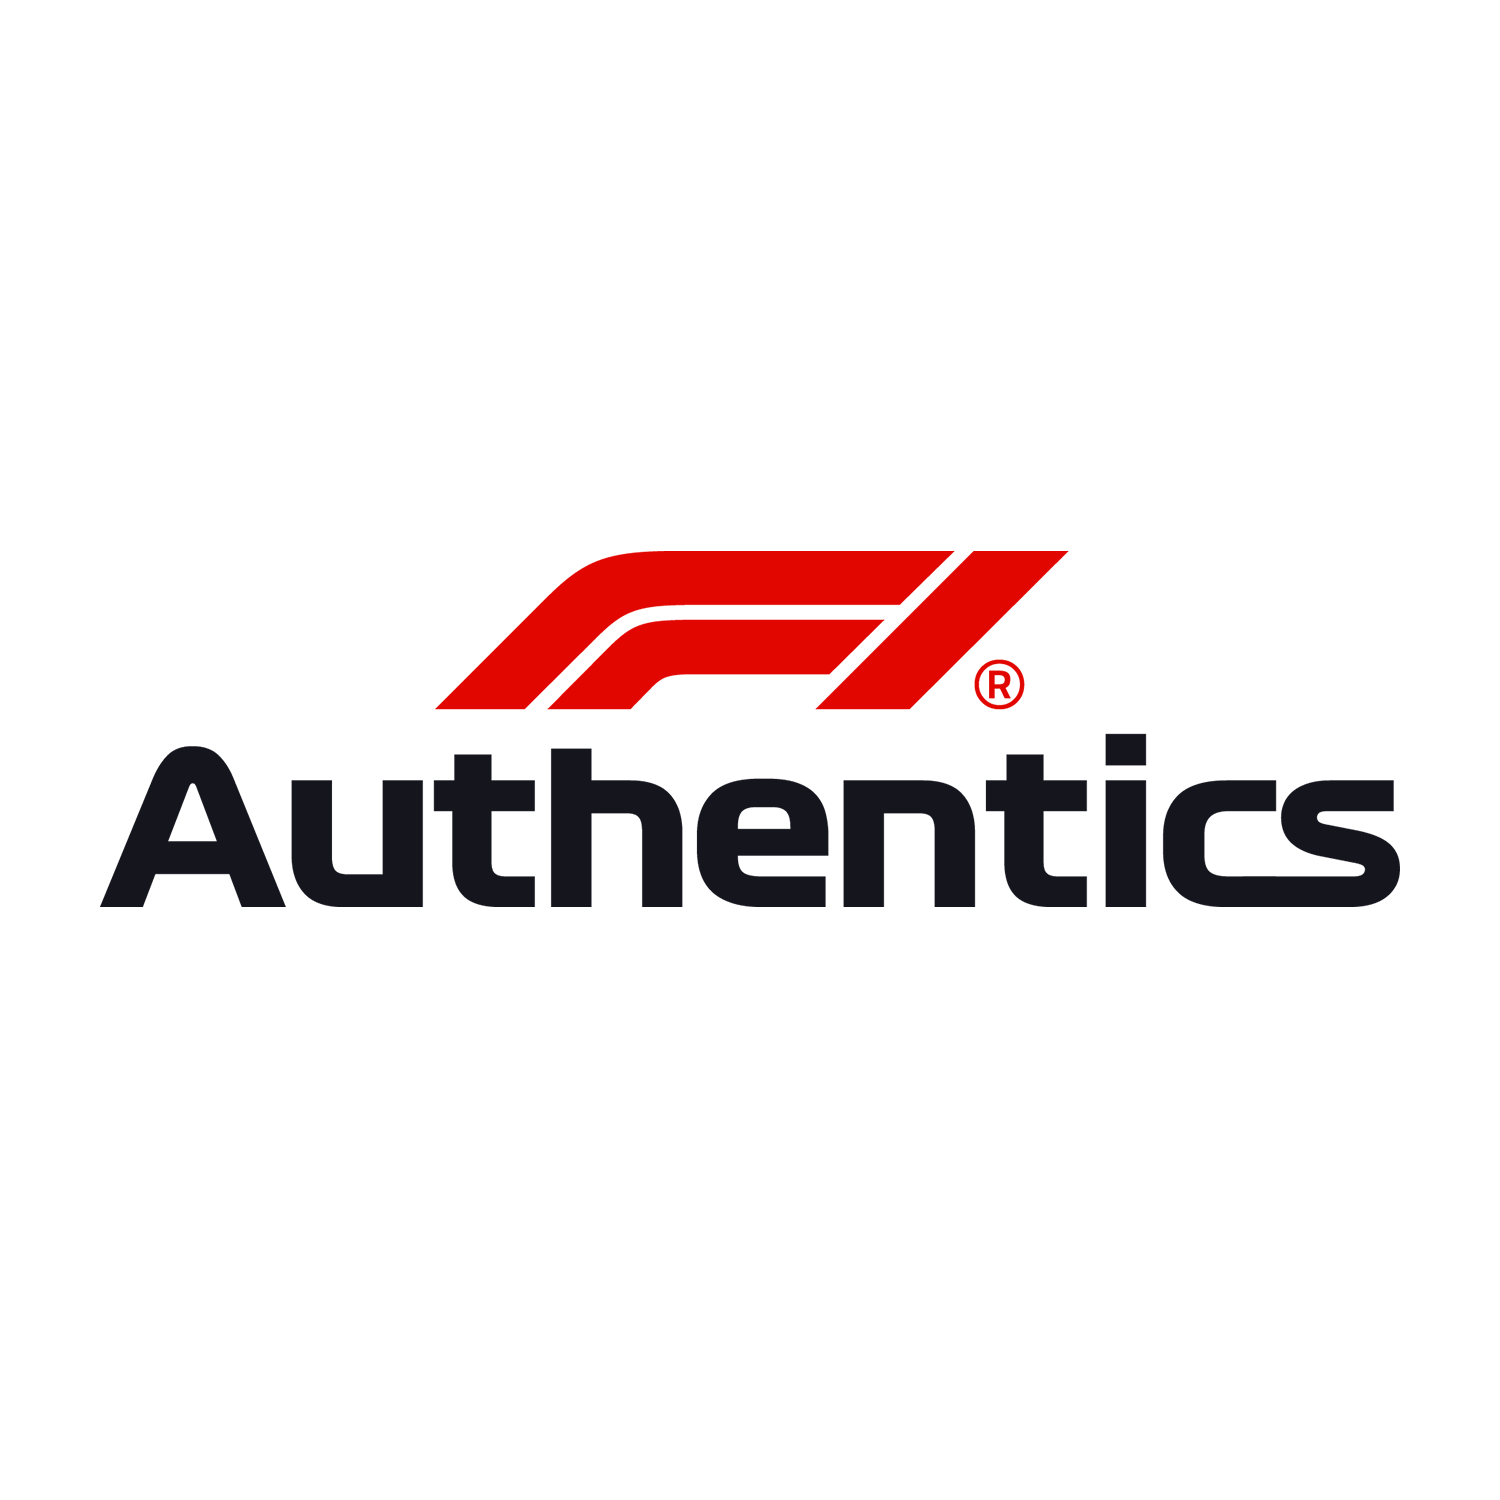 F1 Authentics